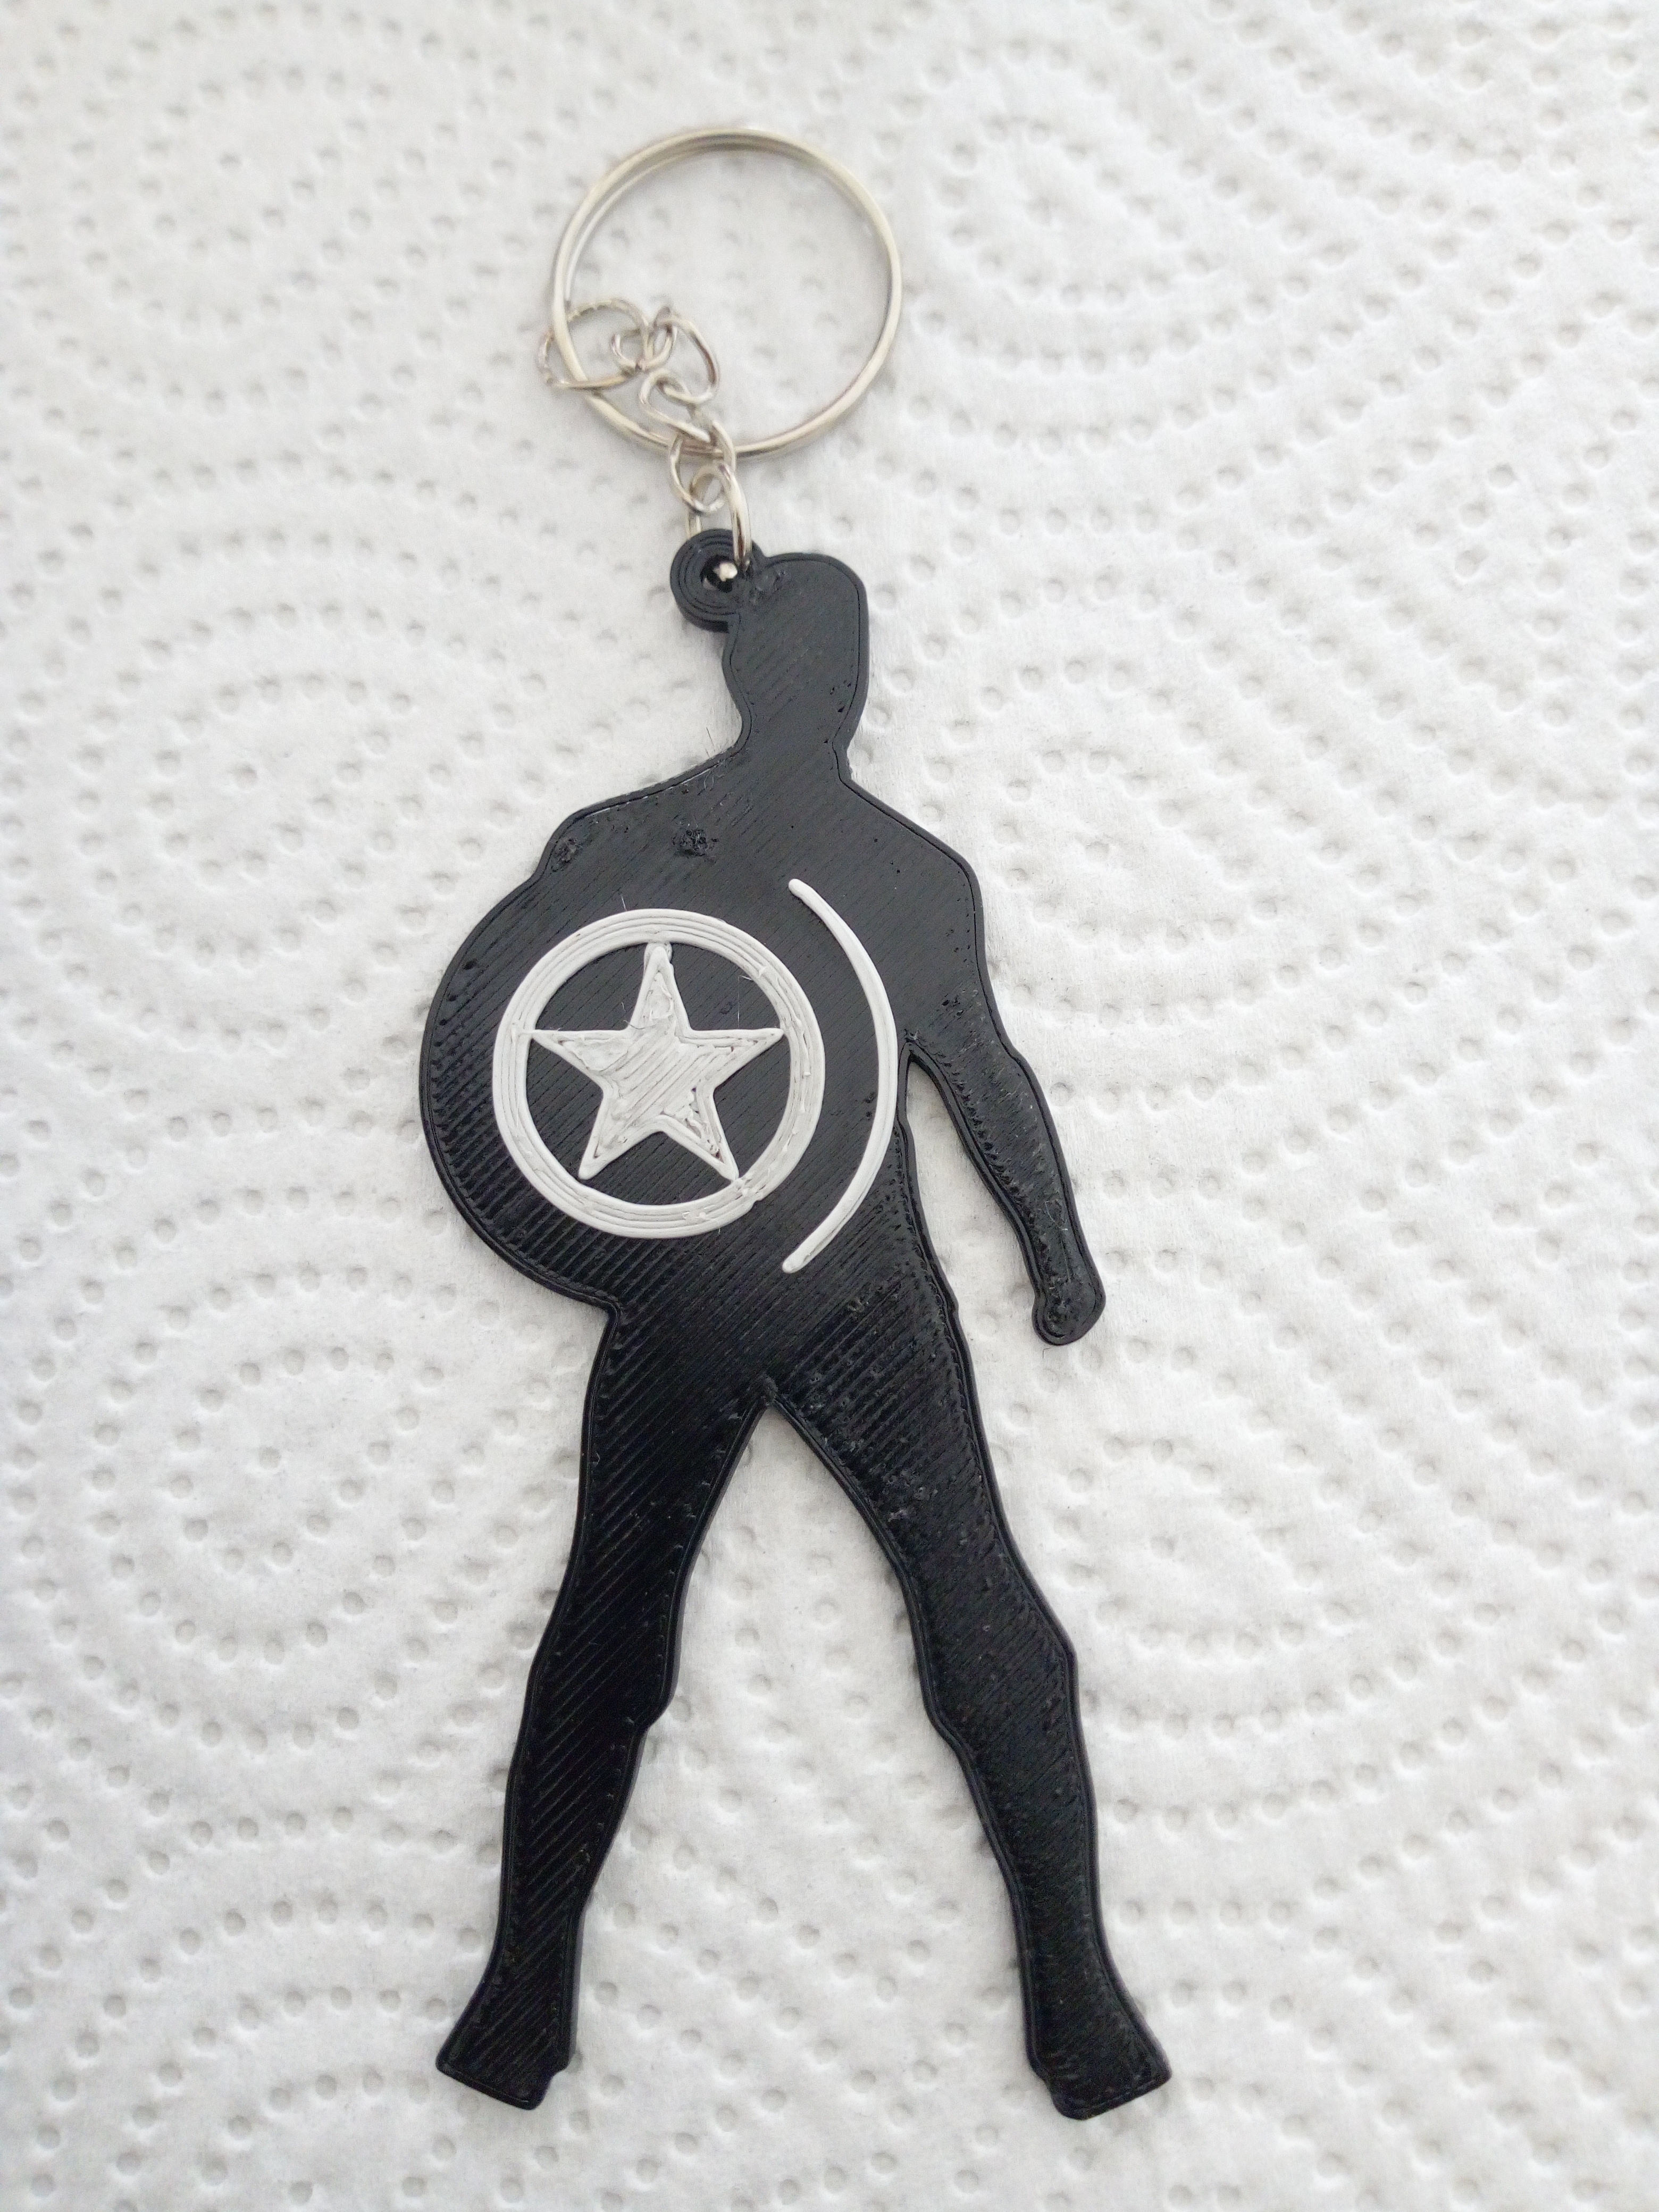 Captain America rigid key chain